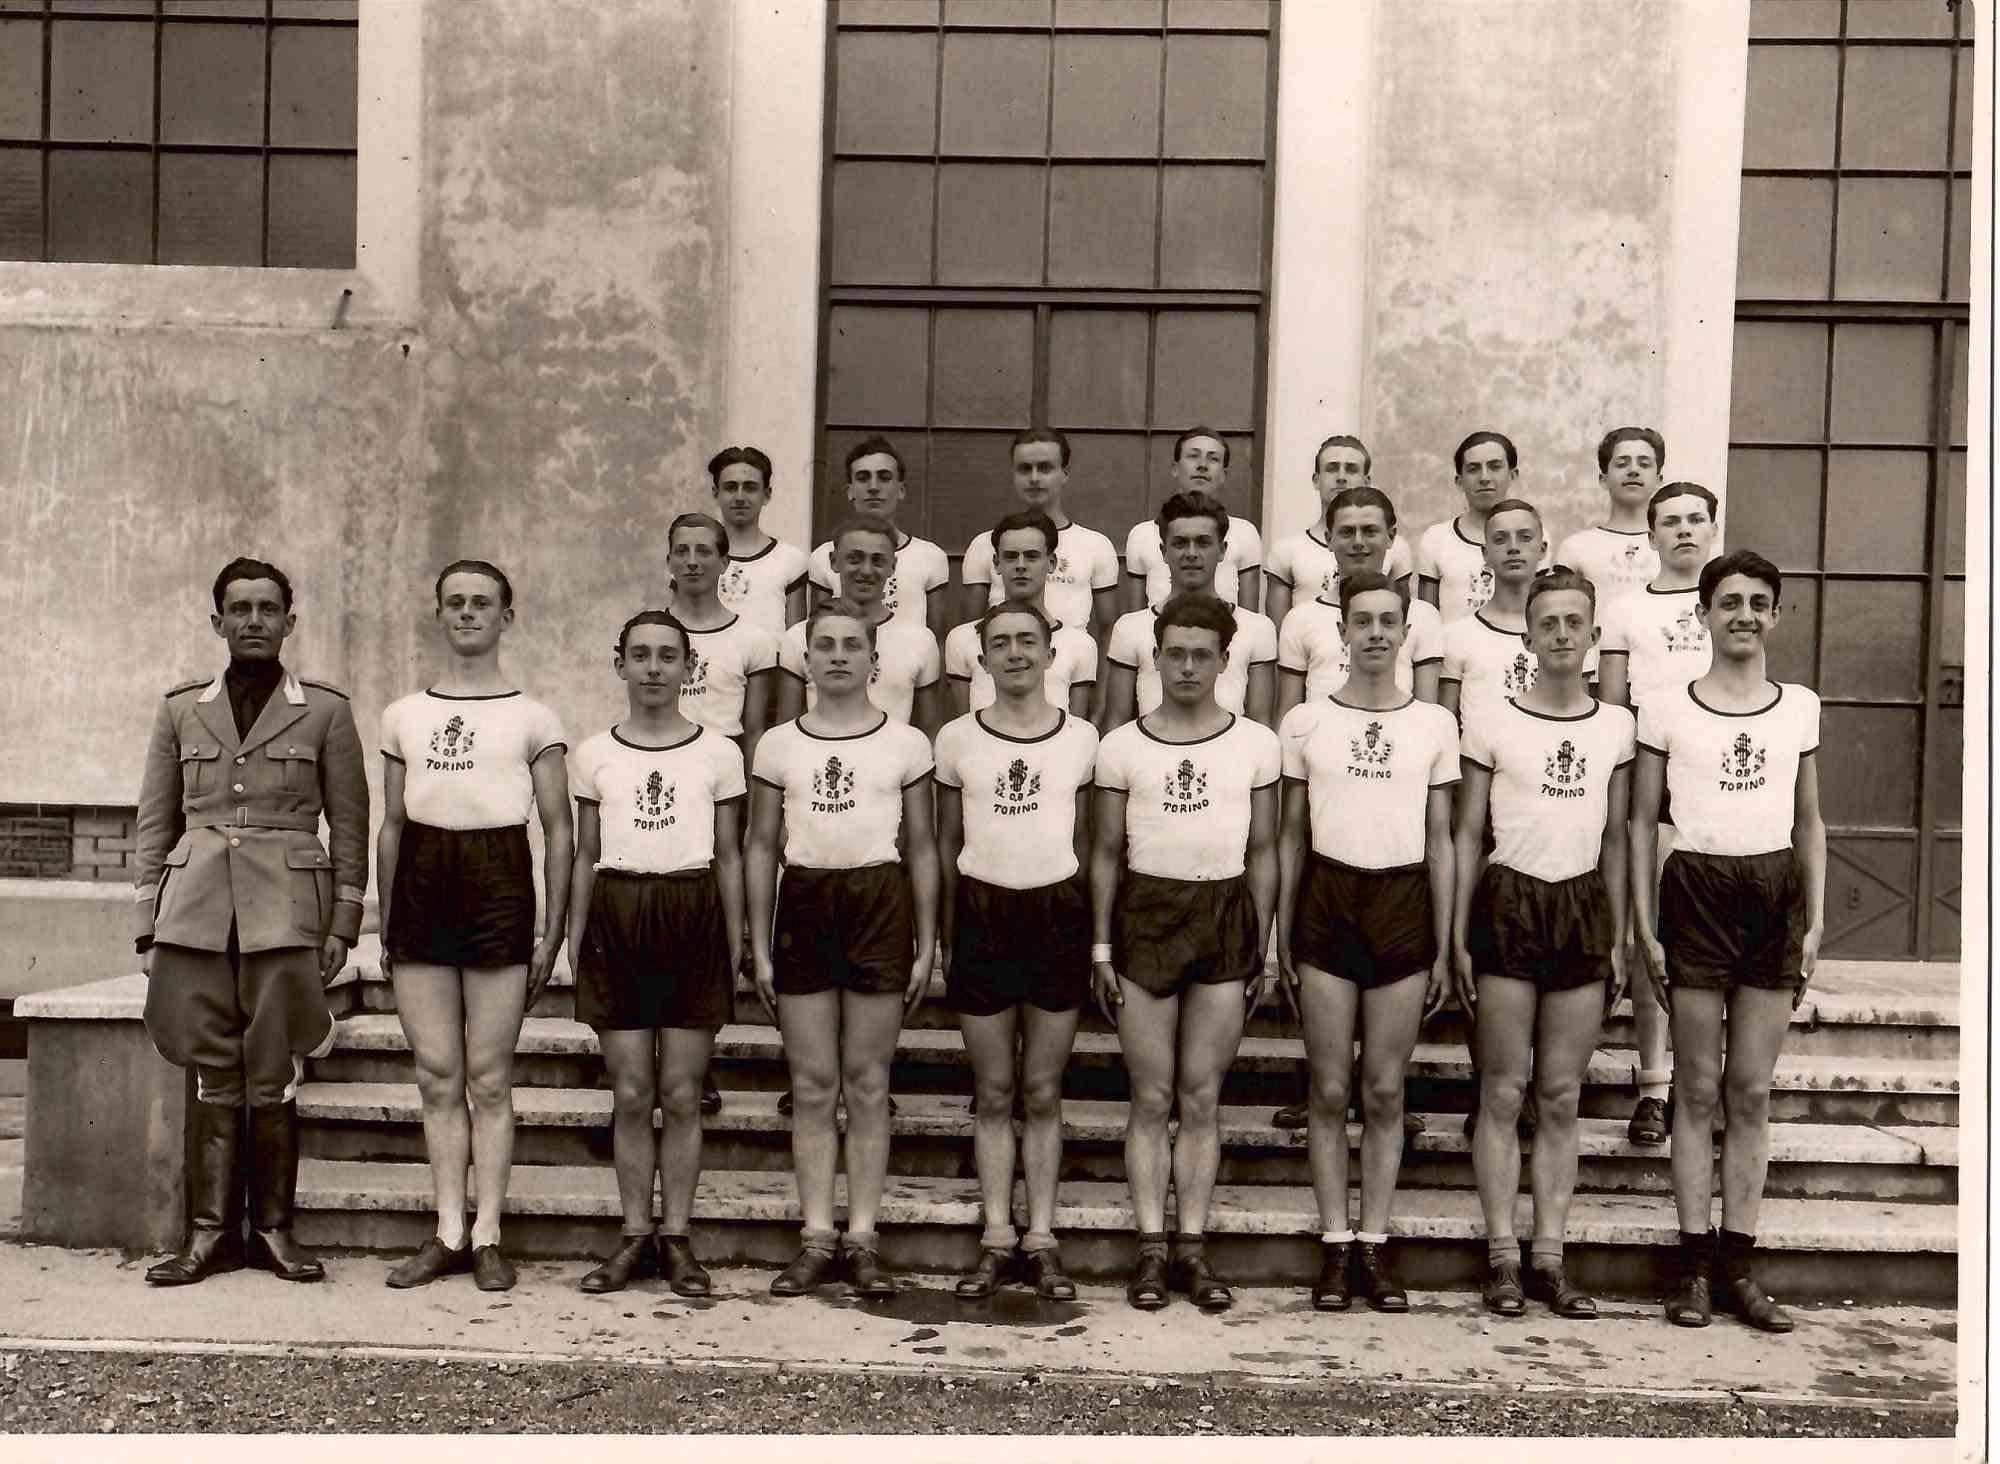 Team in Soldiership in Turin - Vintage B/W photo - 1930s